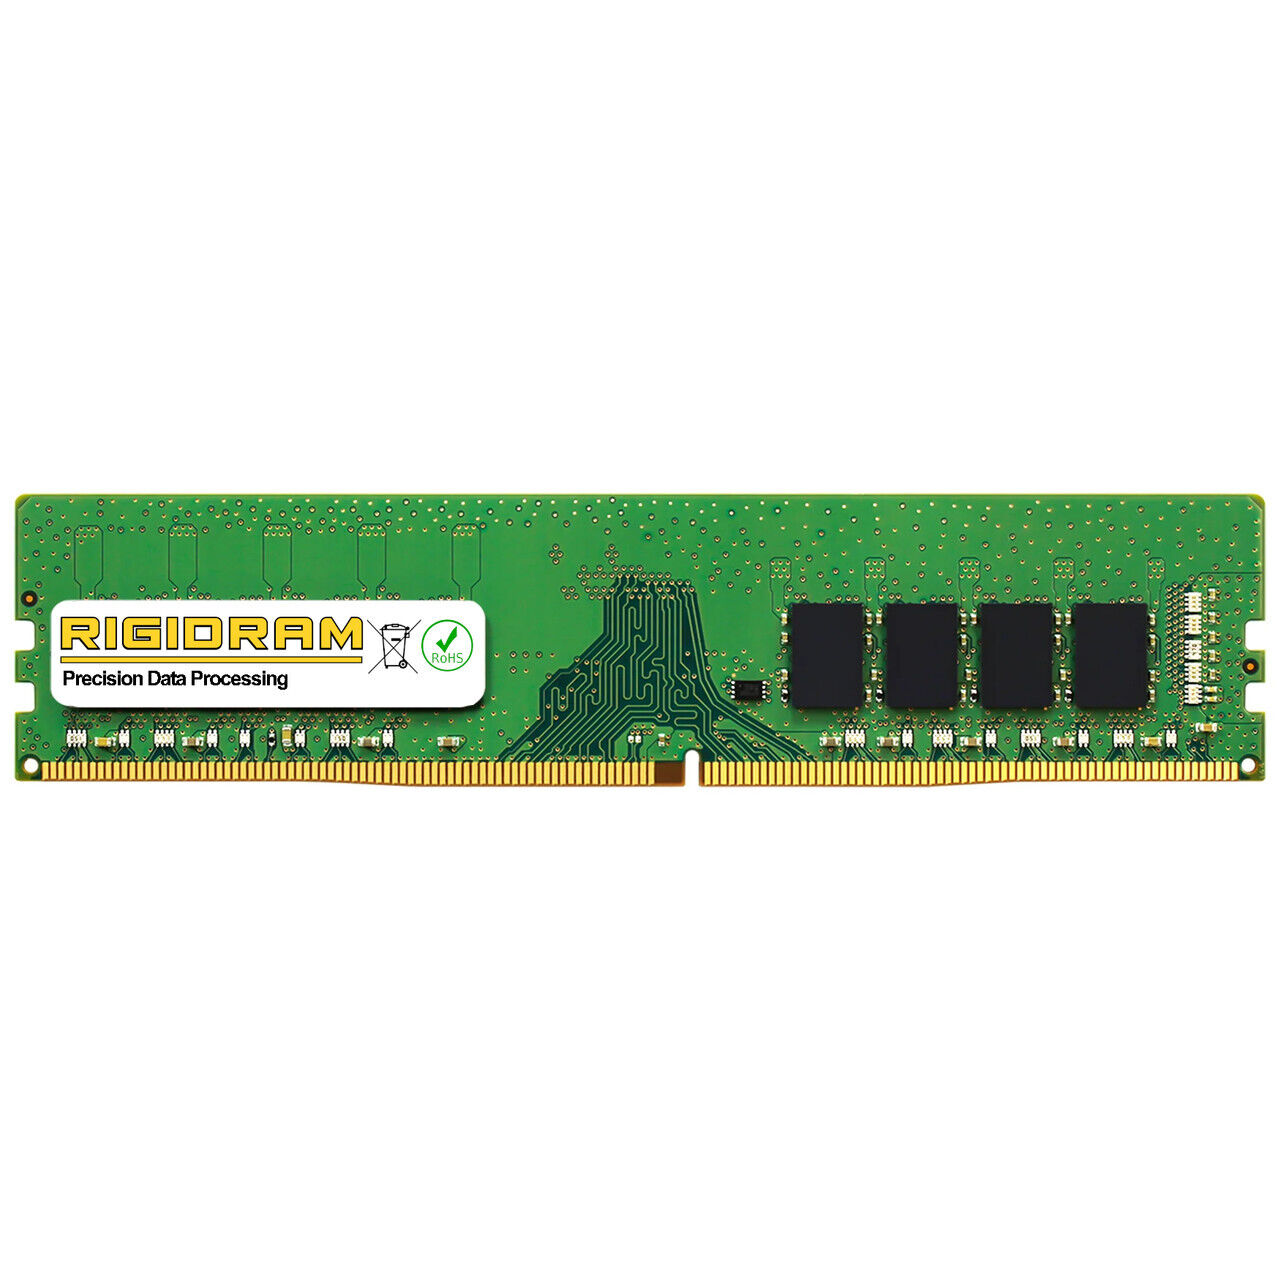 16GB RAM HP Pro 300 G6 DDR4 Memory RigidRAM Upgrades